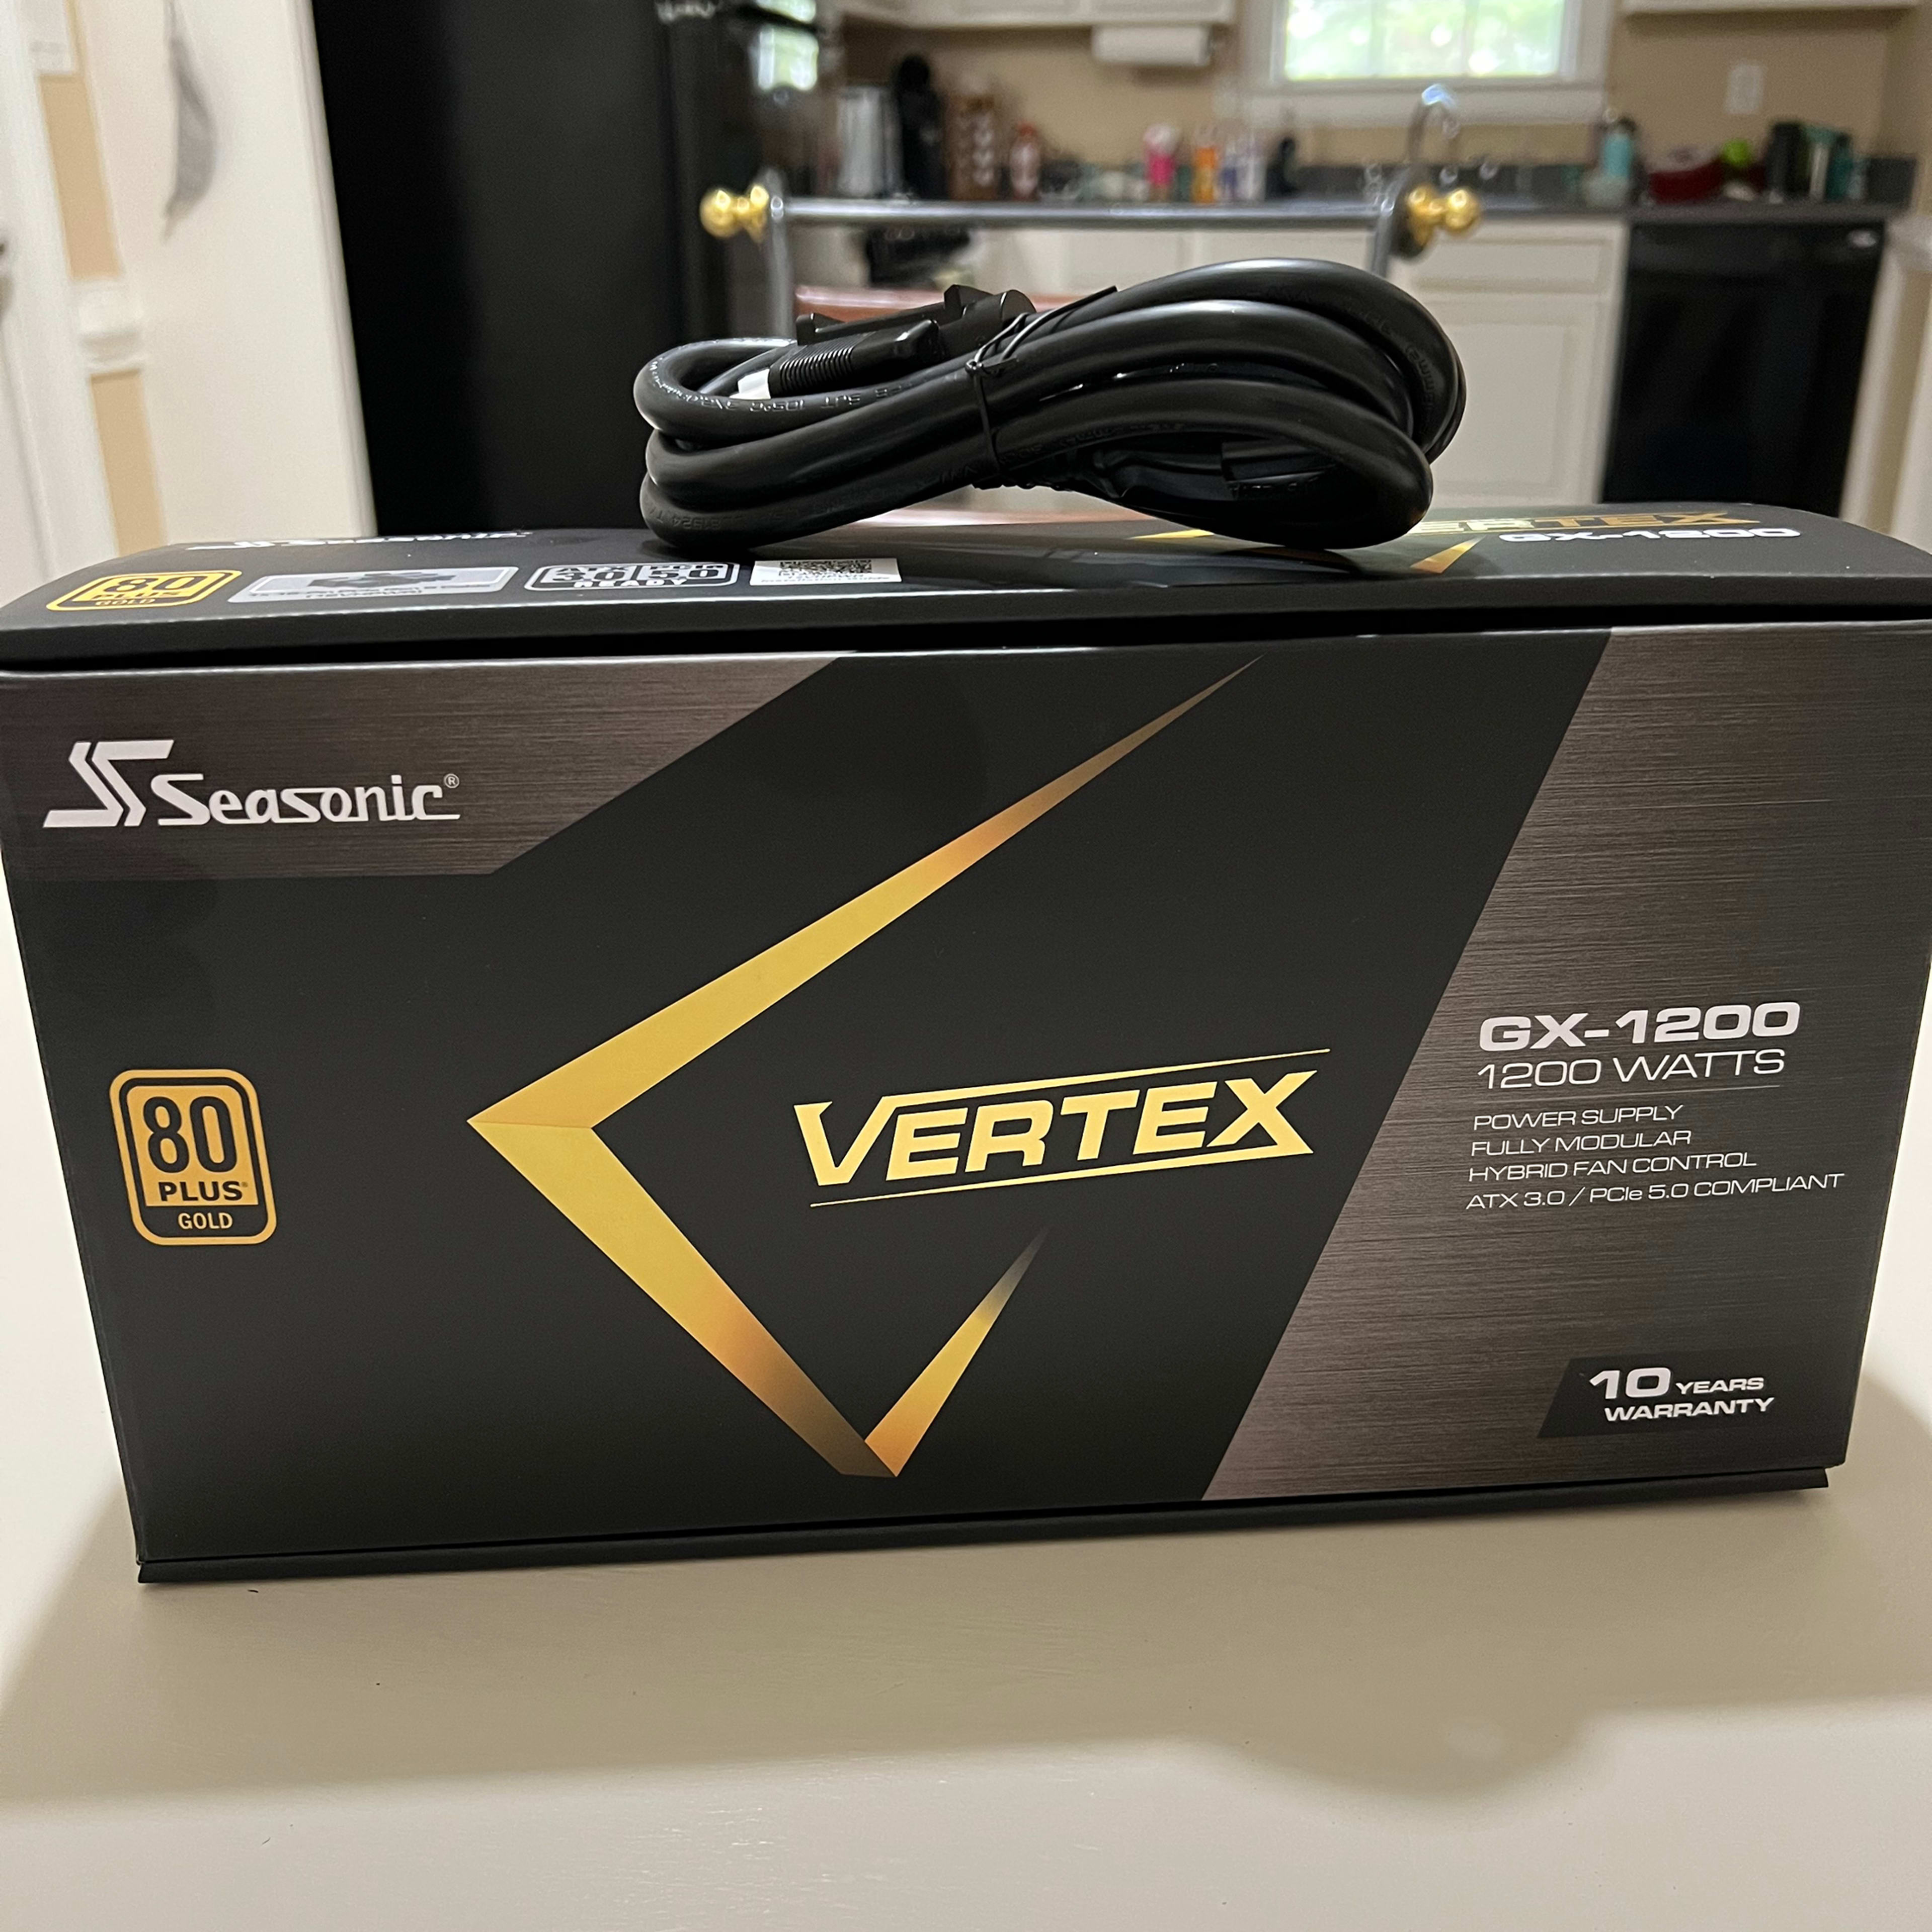 Seasonic Vertex GX-1200